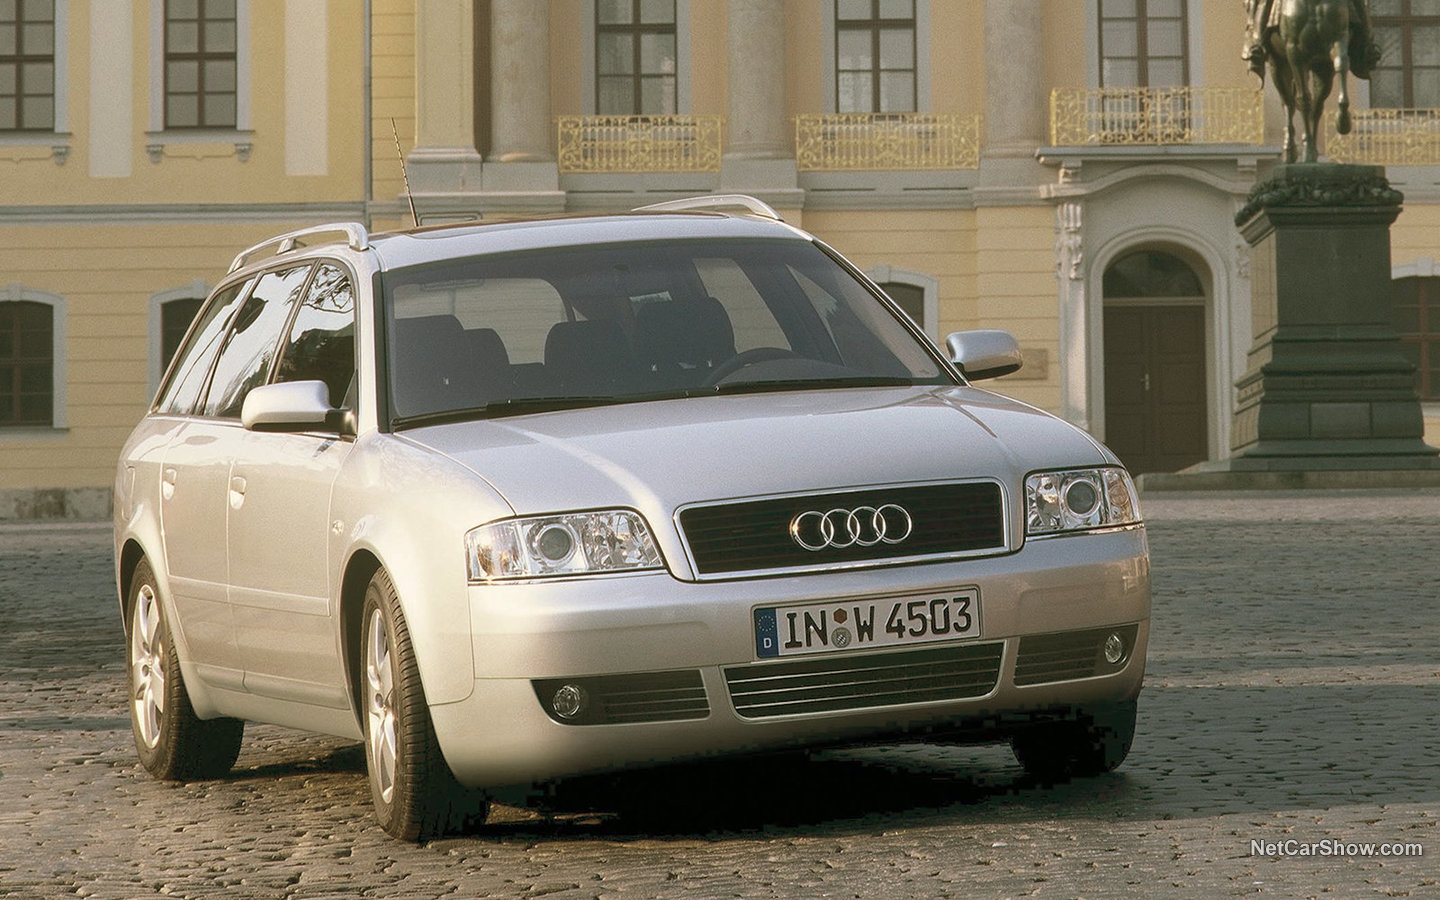 Audi A6 Avant 2001 9f3ca1b7